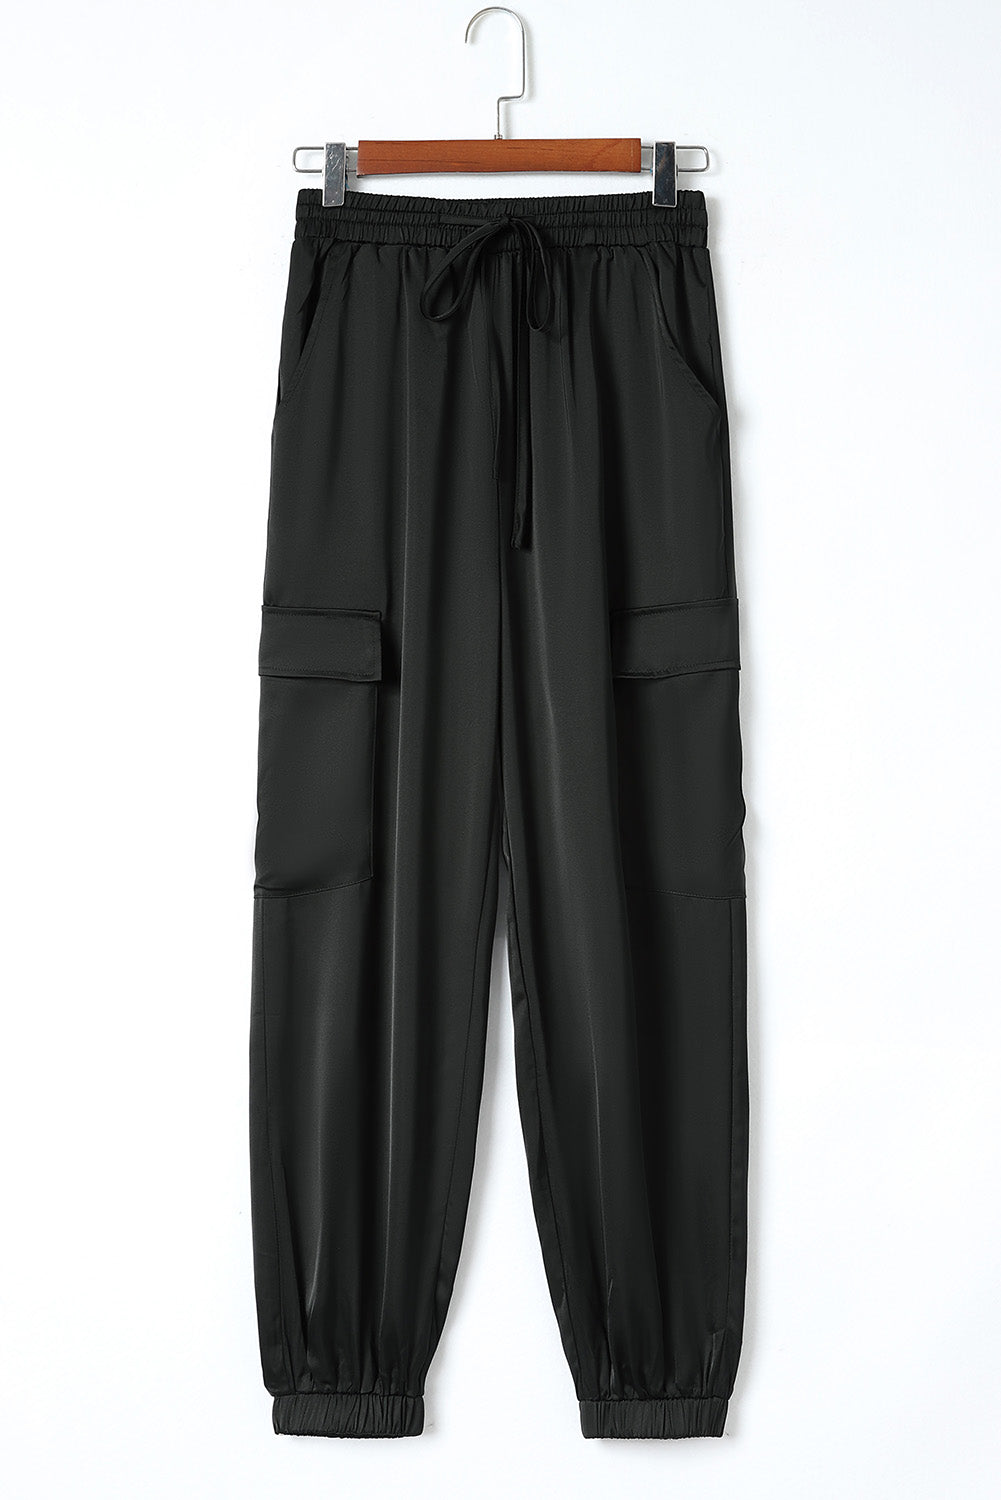 Black Satin Elastic Waist Pants - Bellisima Clothing Collective